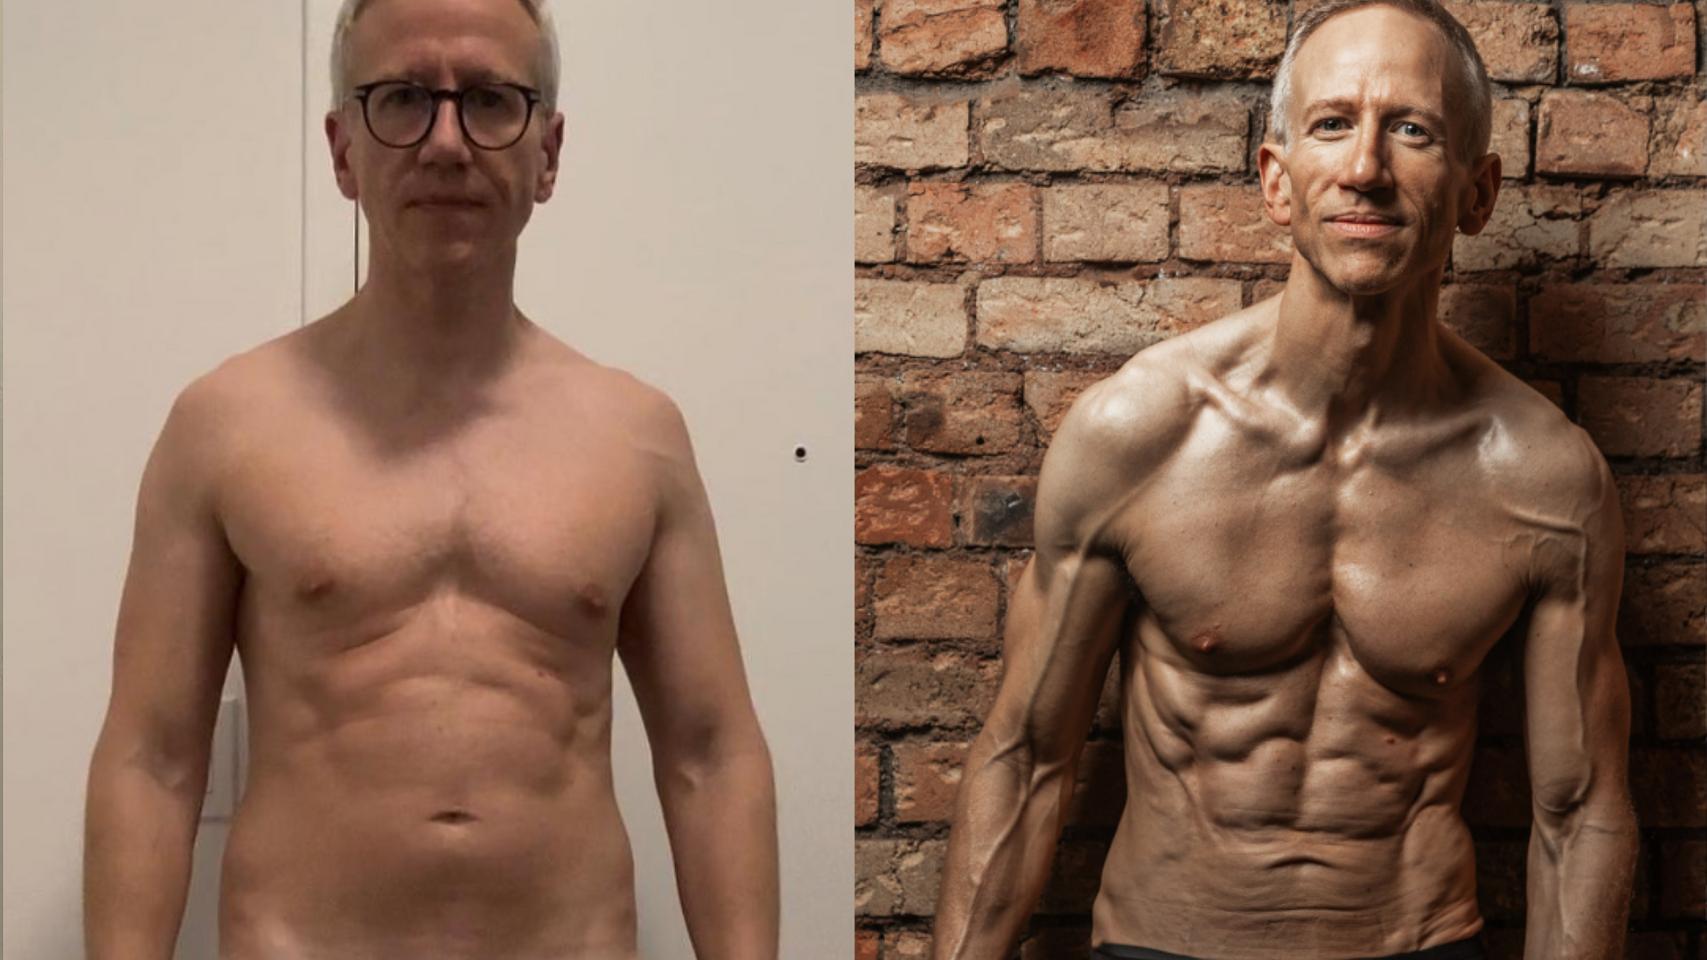 Transformation Thursday: How Matt got shredded in his 50s in 12 weeks